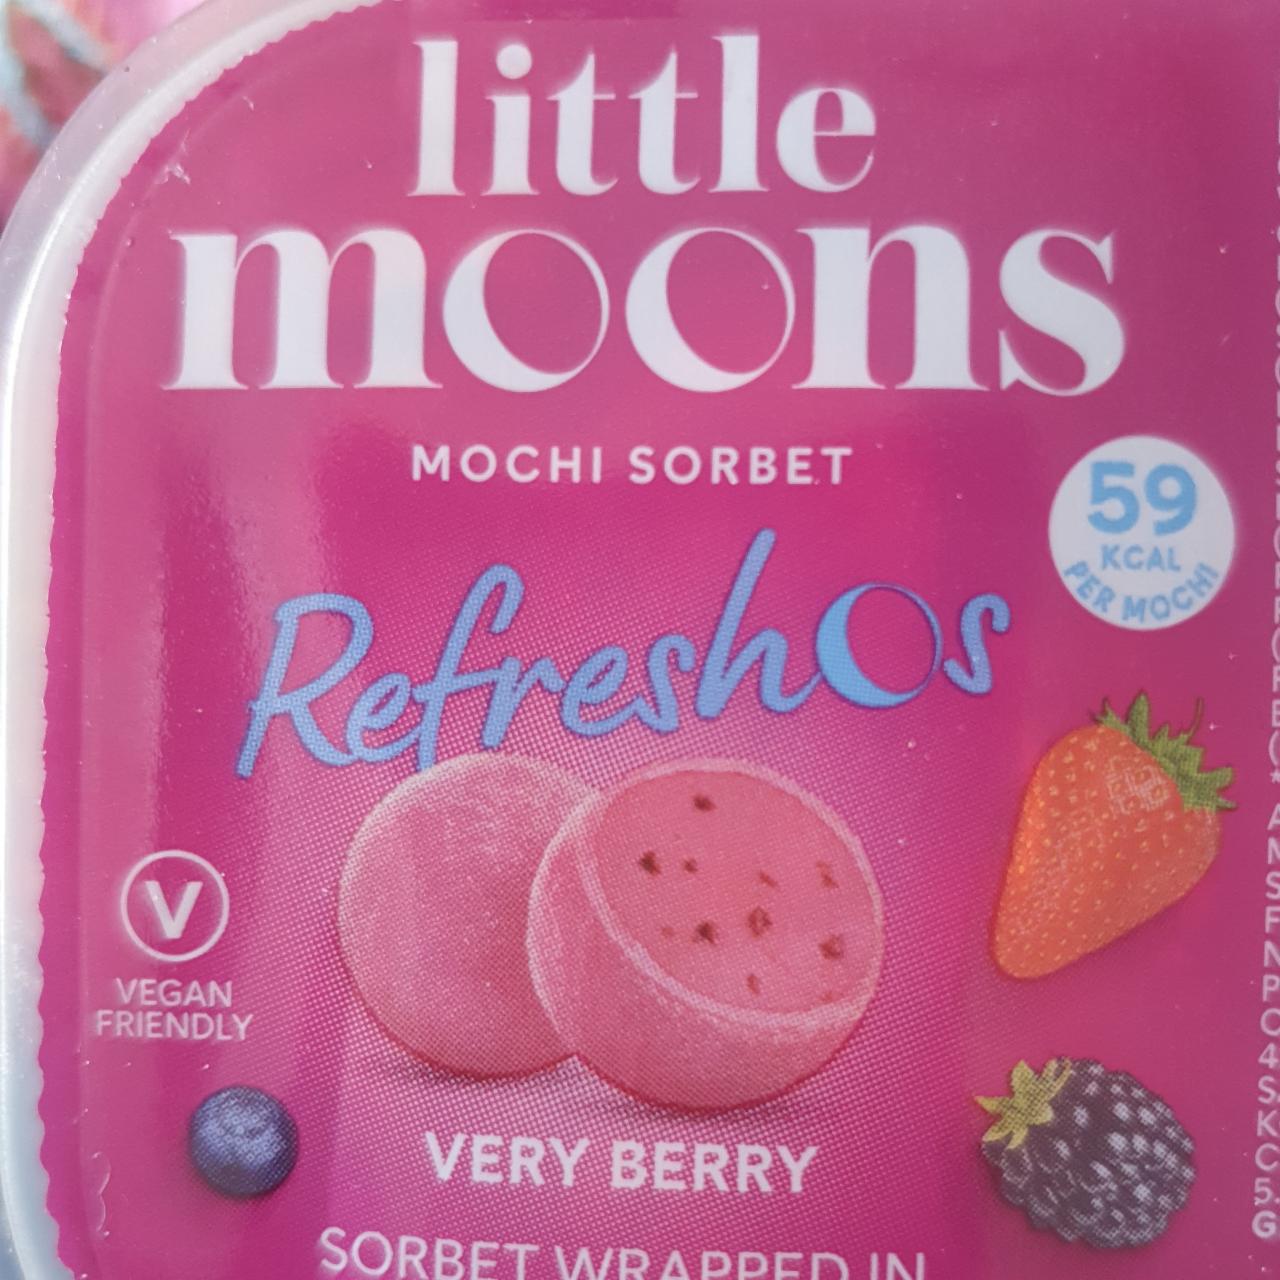 Fotografie - Mochi sorbet Refreshos Very berry Little Moons